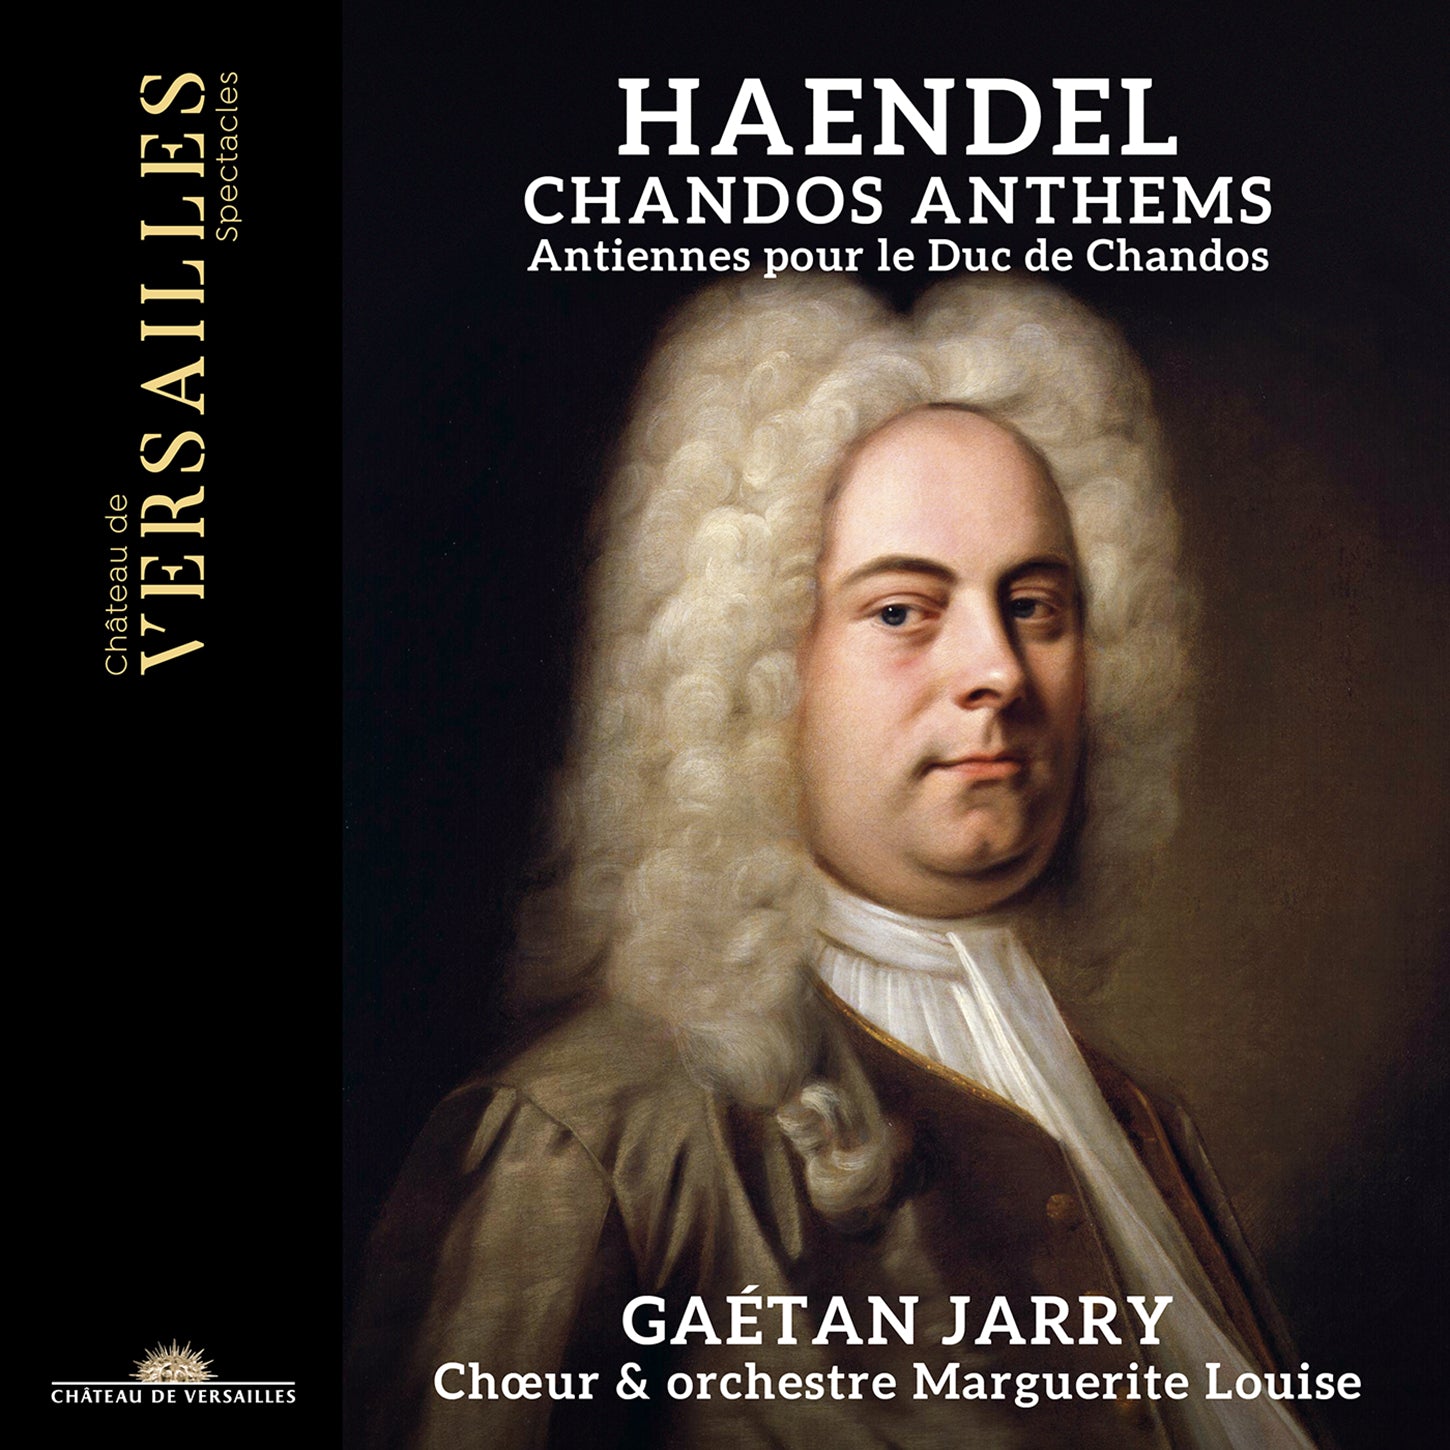 Handel: Chandos Anthems / Jarry, Choeur & orchestre Marguerite Louise